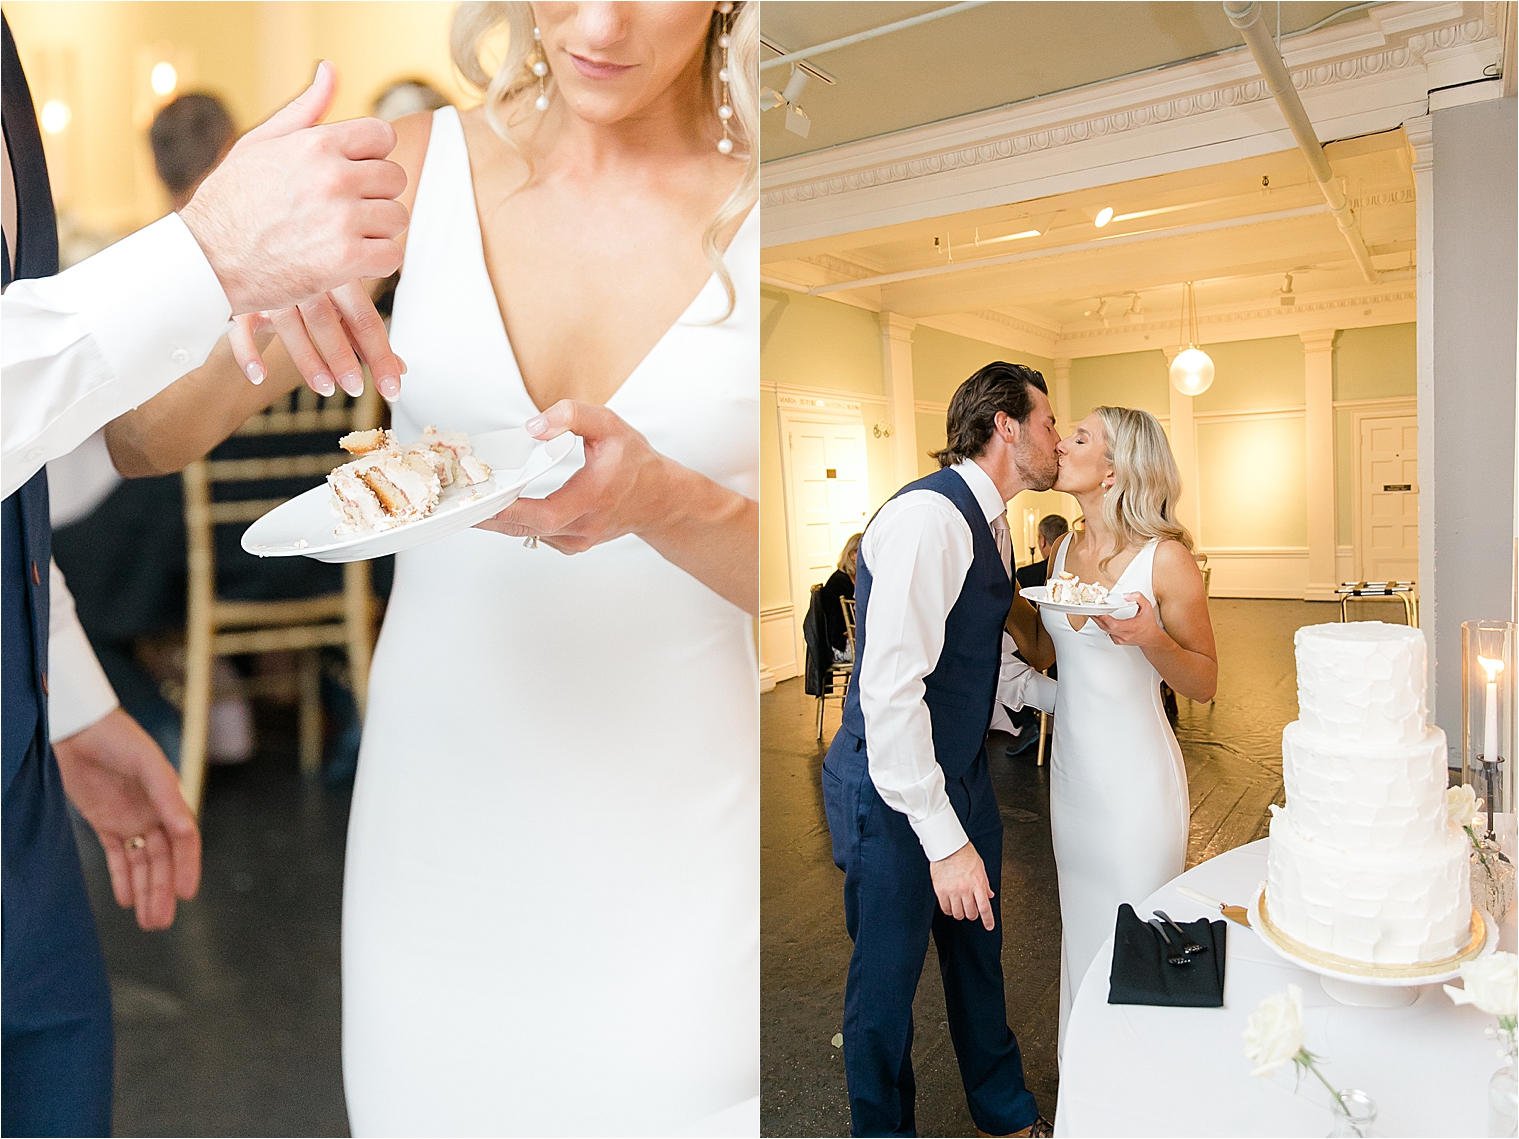 Lightner Museum Wedding - couple cutting the cake